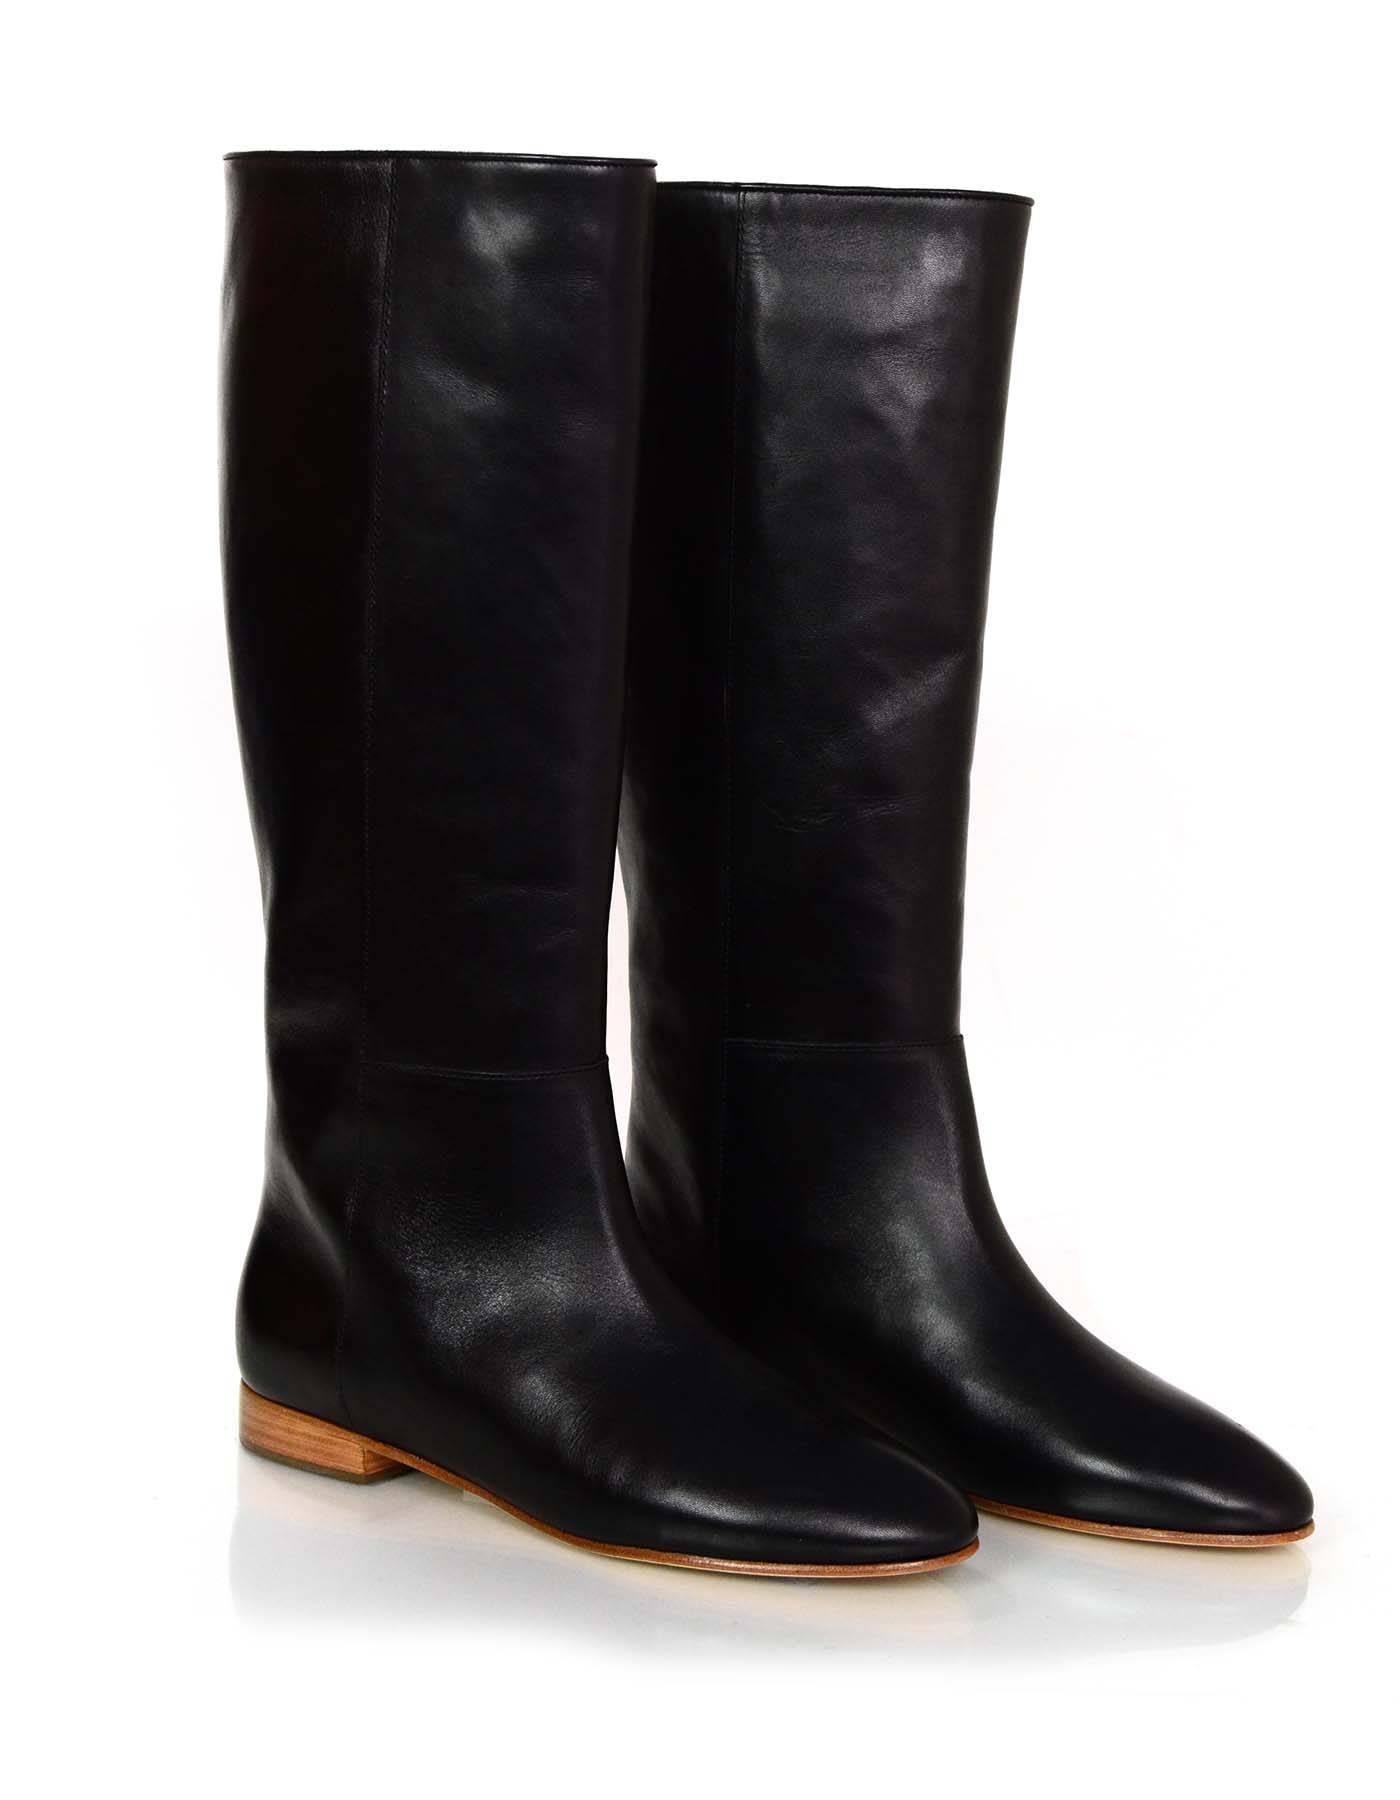 Women's Loeffler Randall Black Leather Boots Sz 8